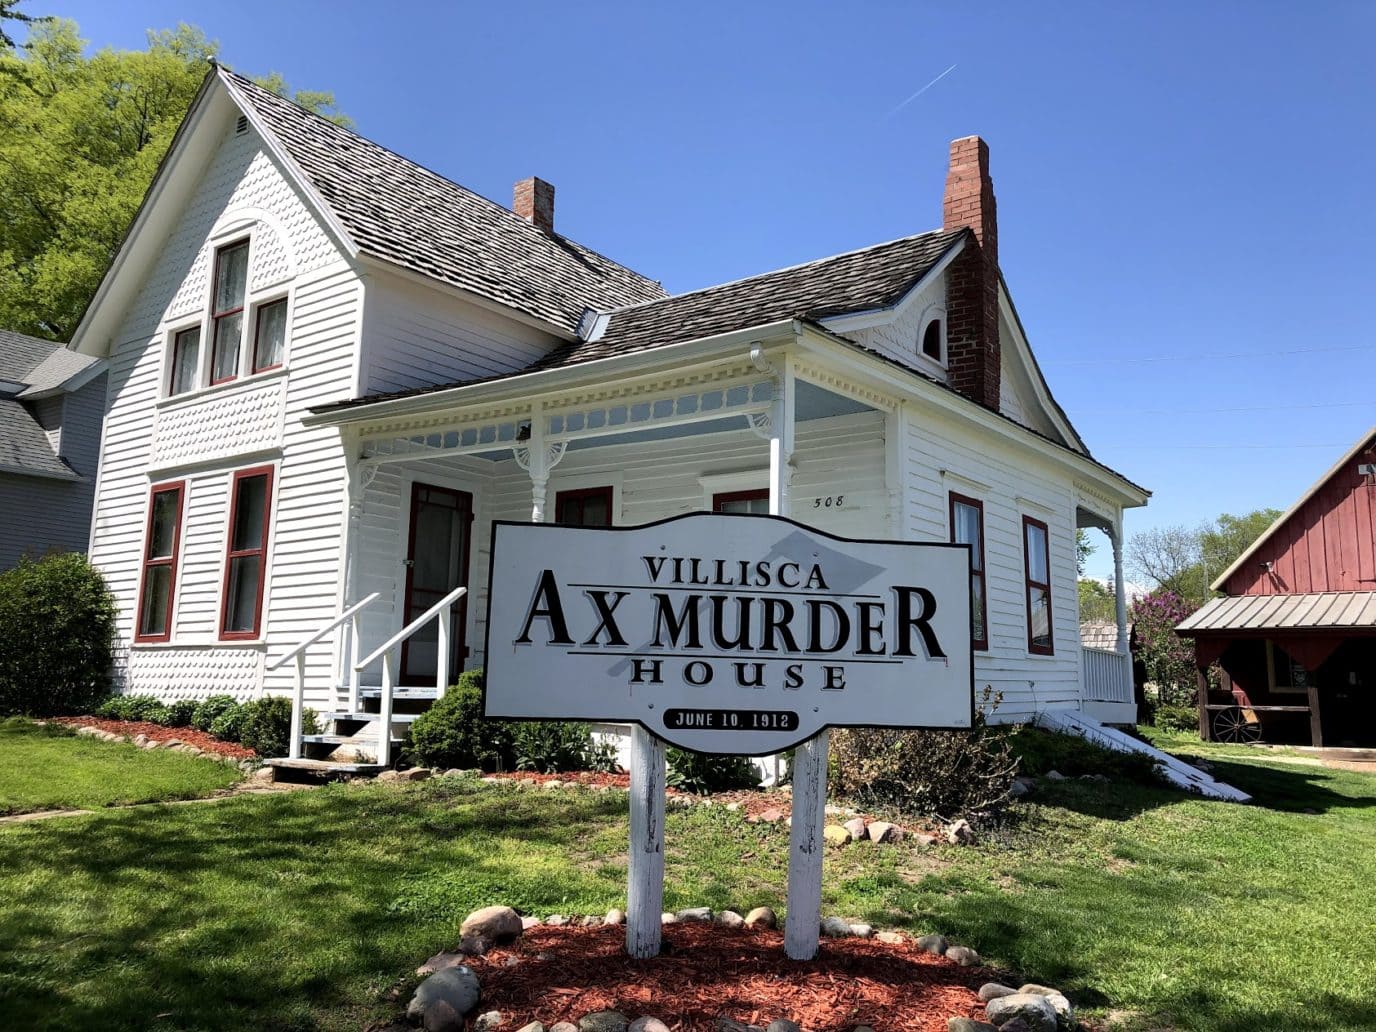 Villisca Ax Murder House – The Scene Of A Brutal Mass Murder In 1912